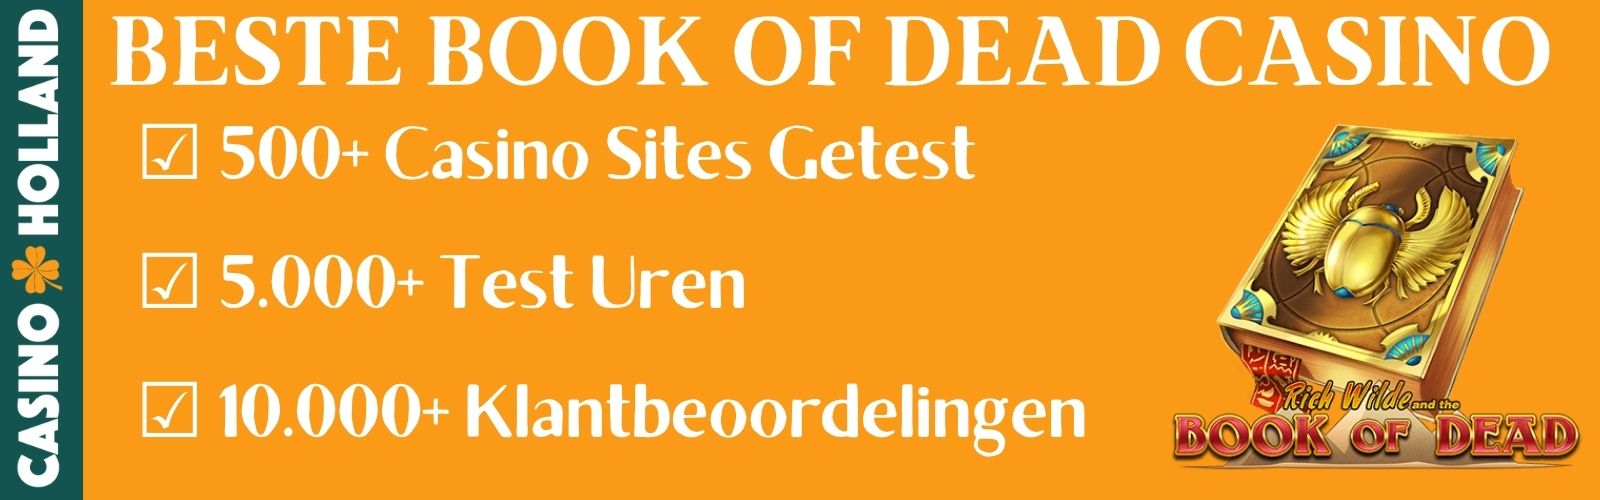 Book of Dead Casino Nederland